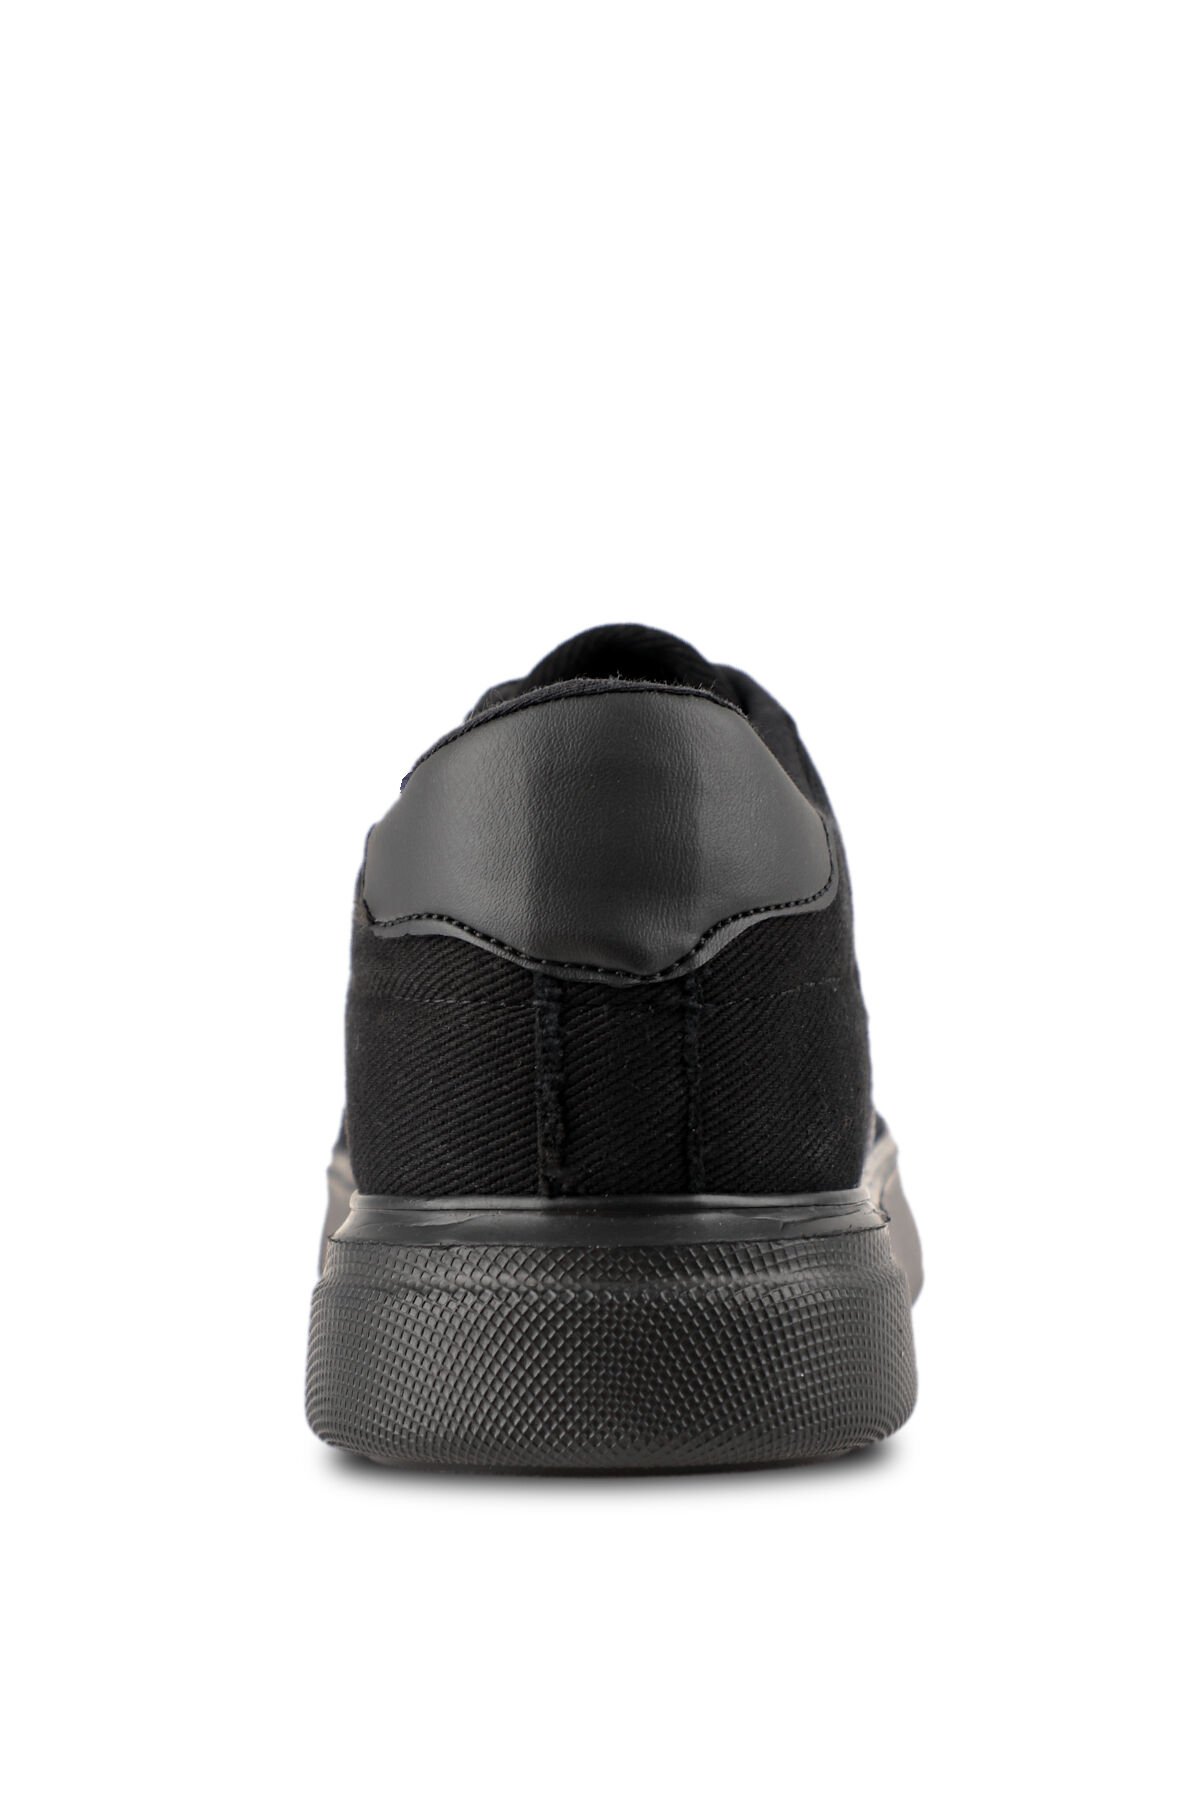 Slazenger DALY Sneaker Erkek Ayakkabı Siyah - Thumbnail